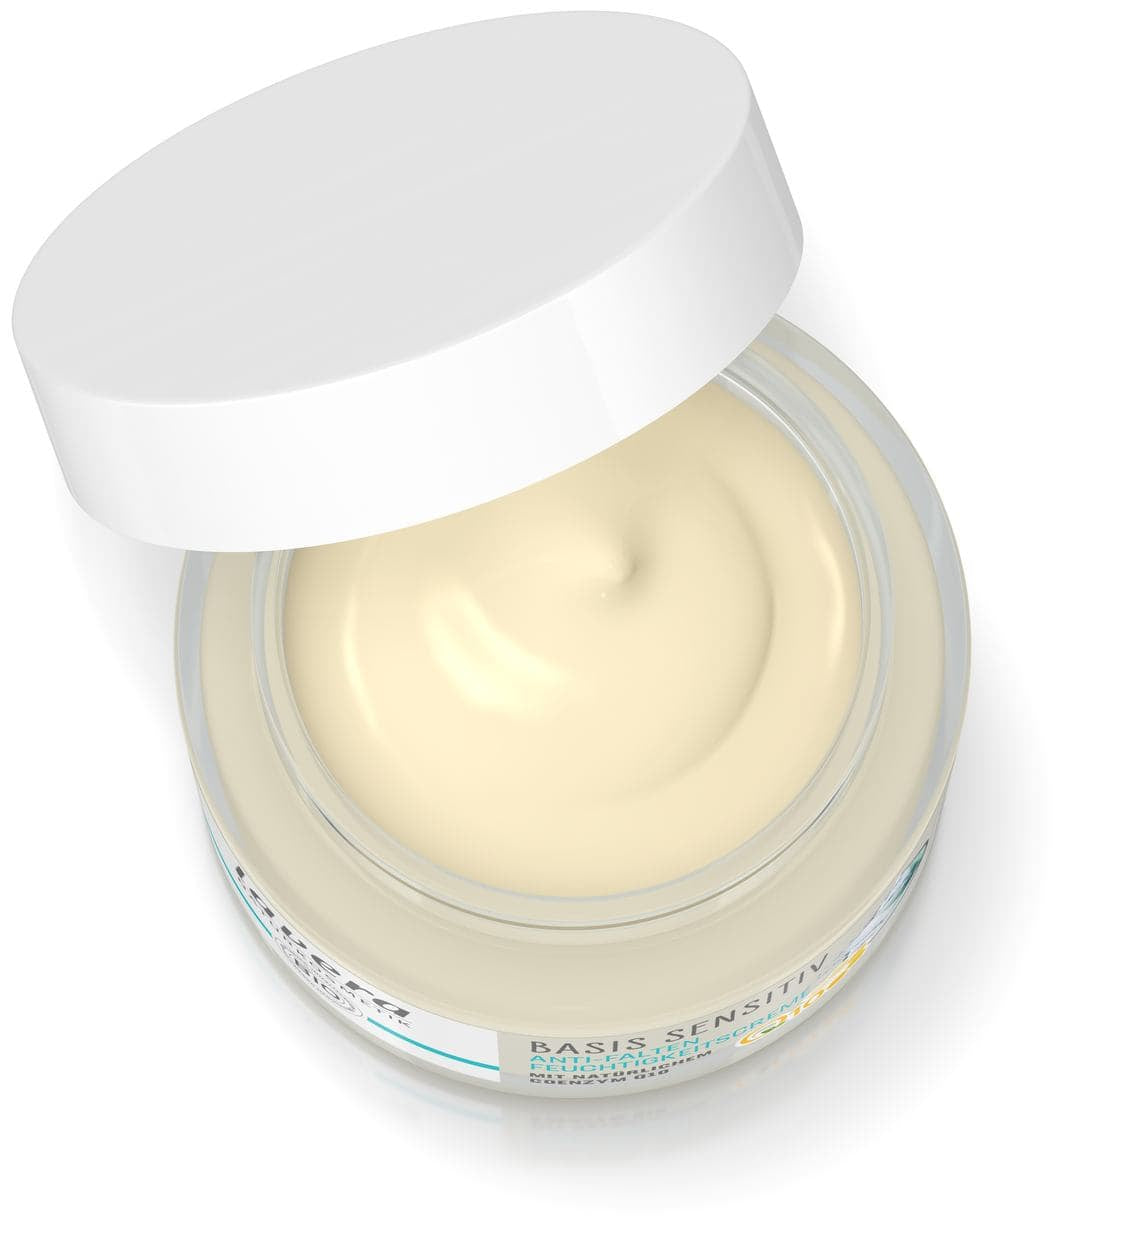 Lavera Basis Sensitiv Anti-Ageing Moisturising Cream Q10 50ml